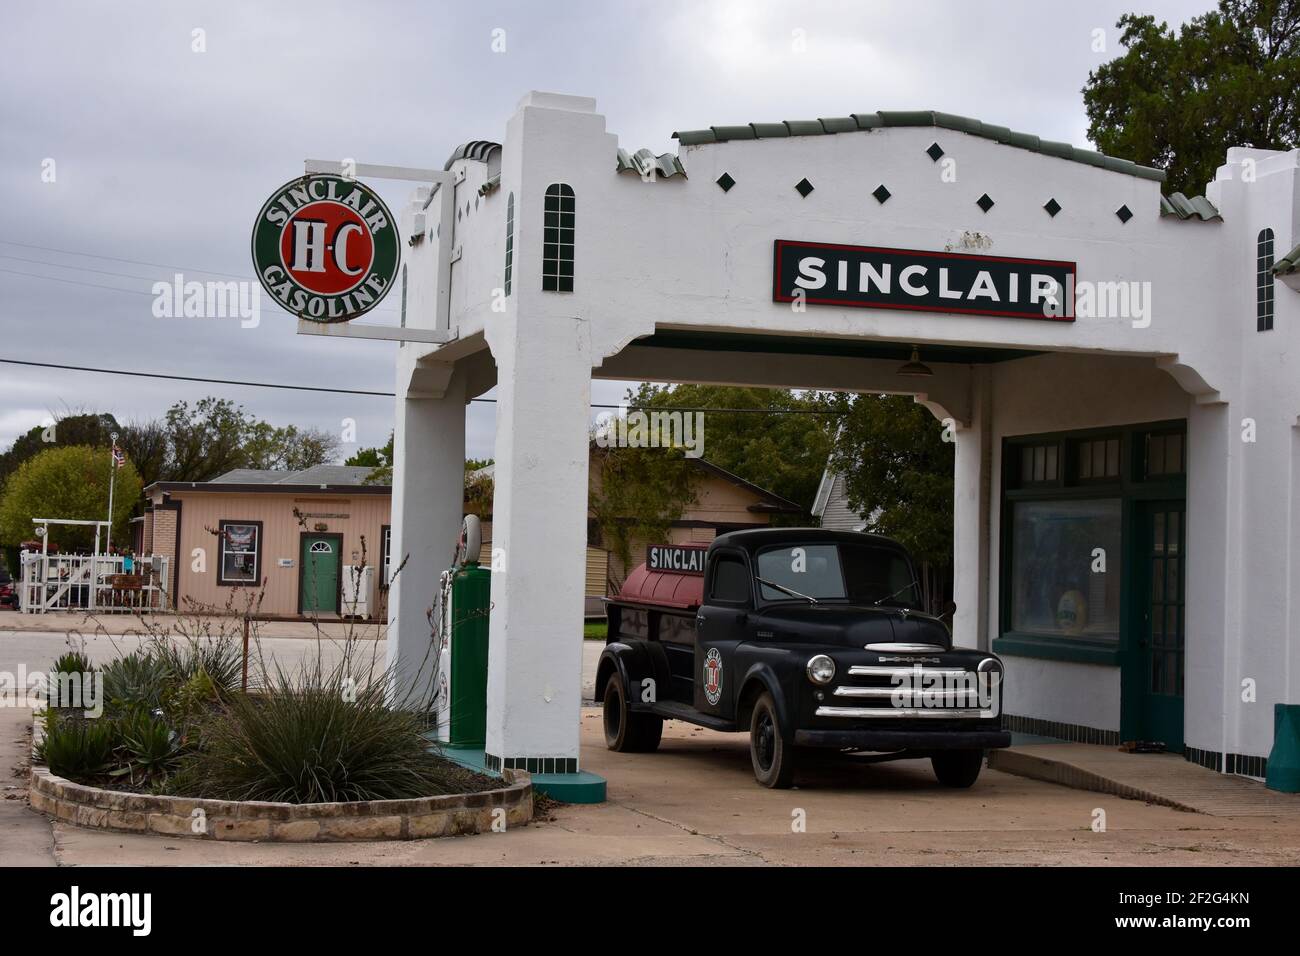 Sinclair garage, Albany, Texas, États-Unis Banque D'Images